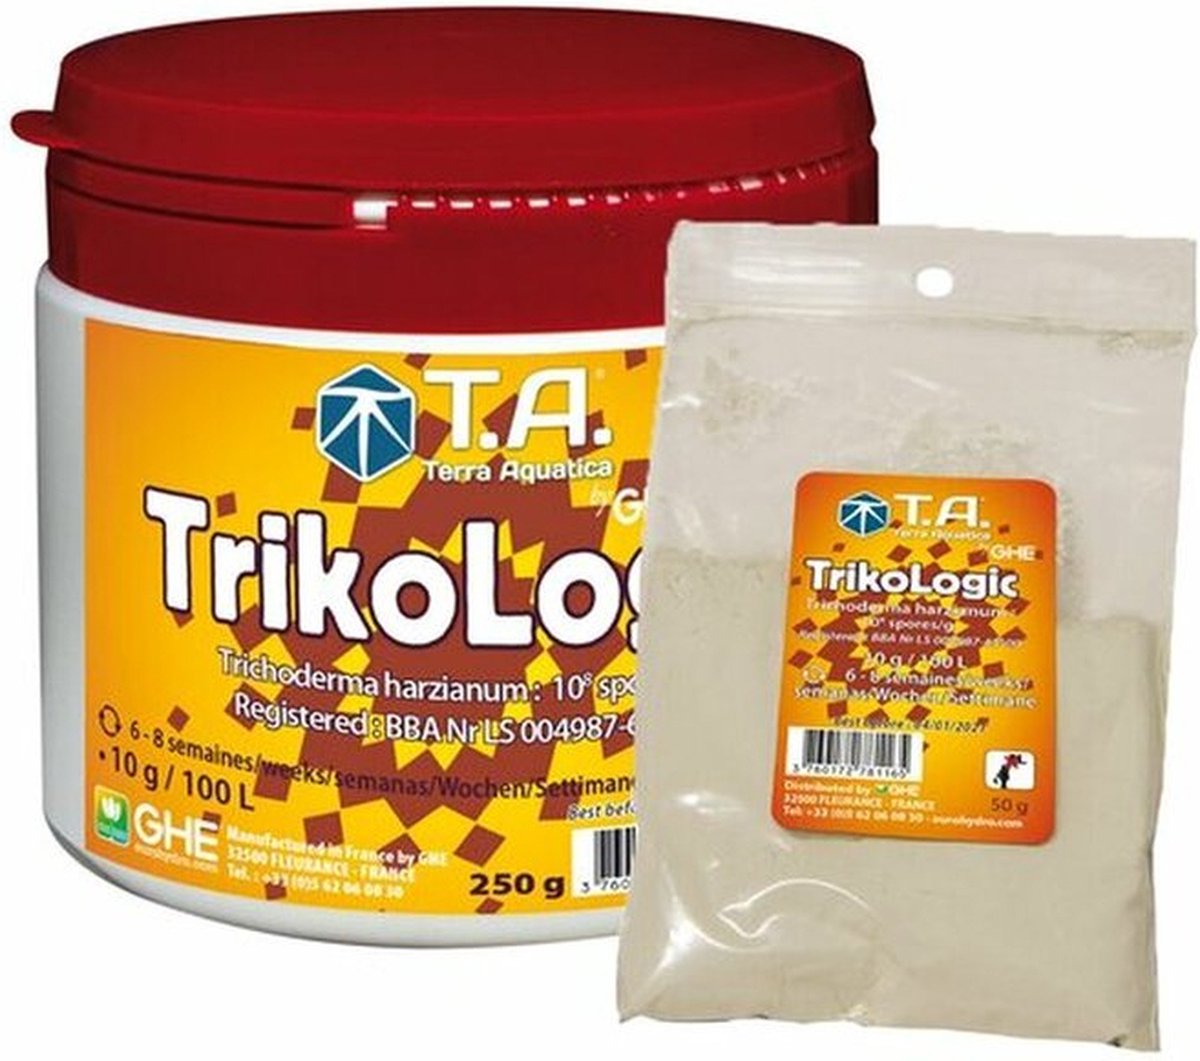 GHE TrikoLogic(Bioponic Mix) 50 gram